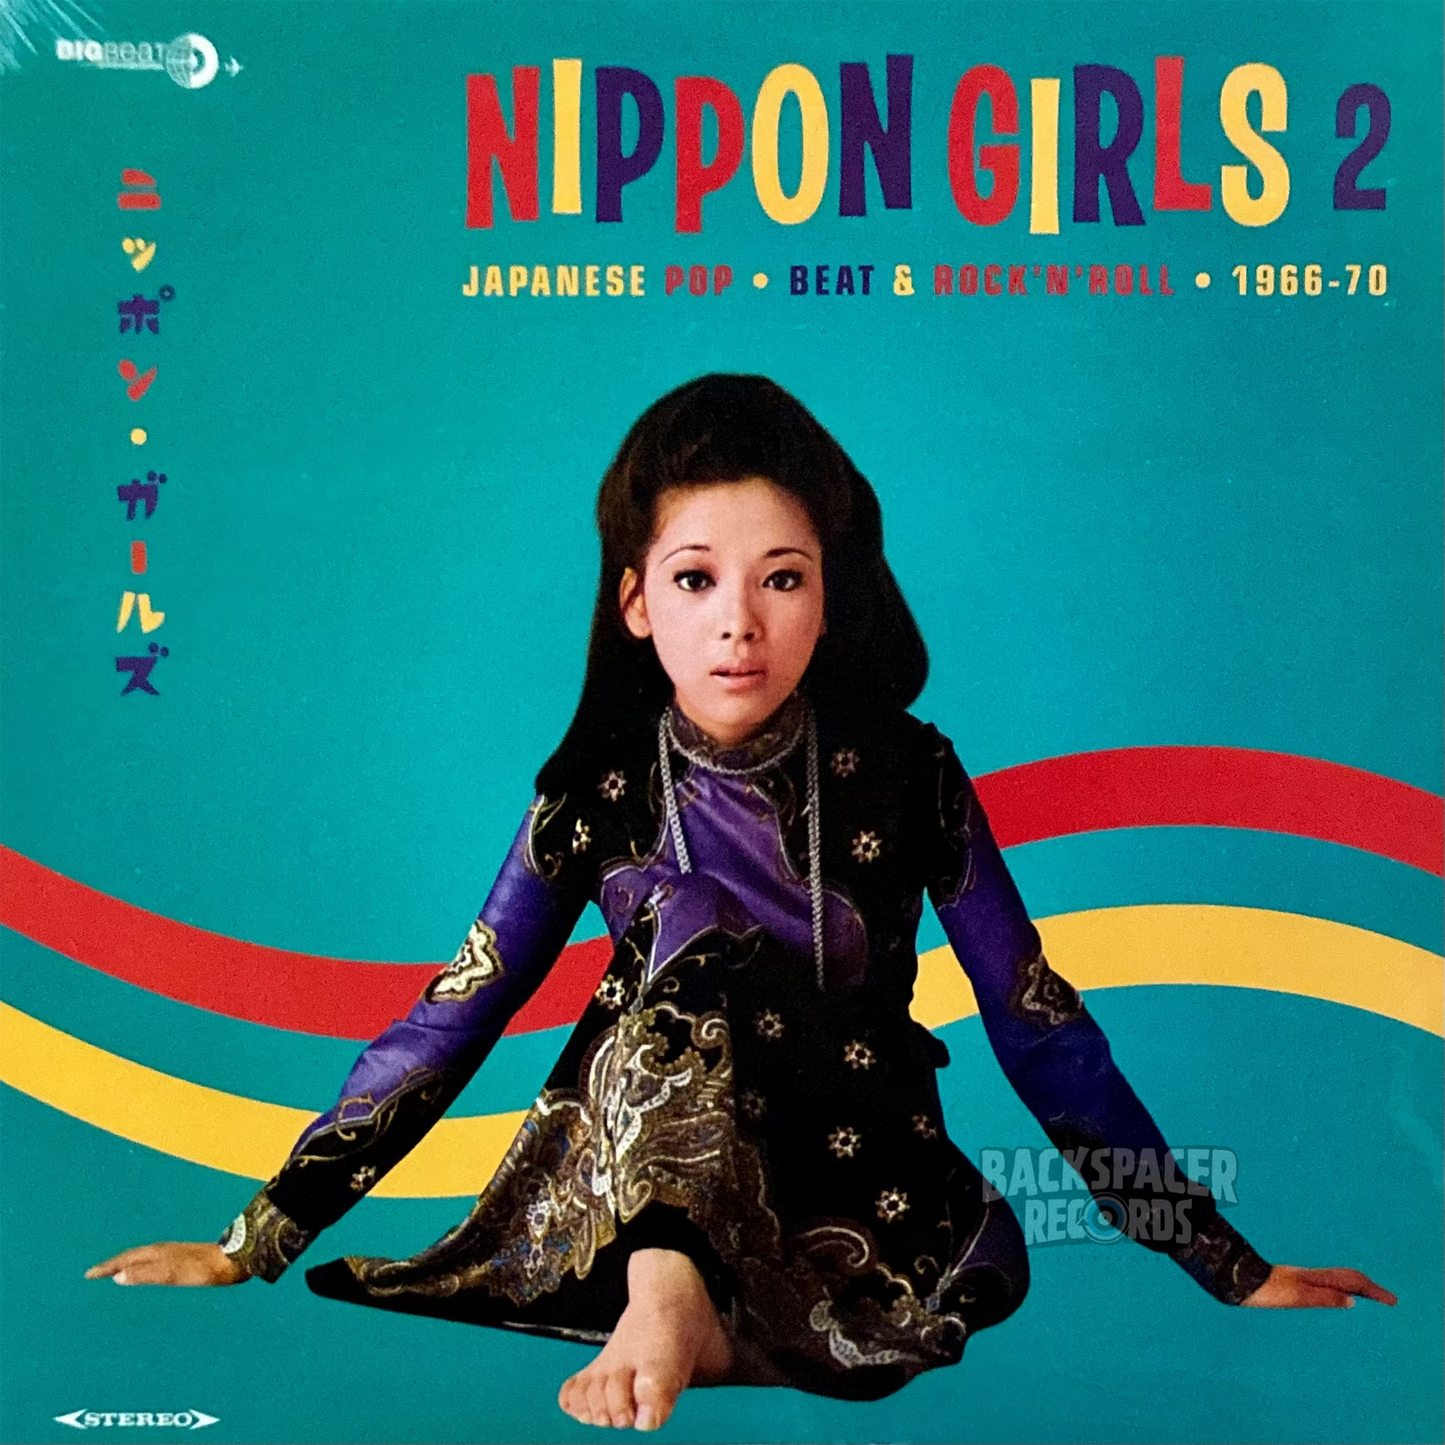 Nippon Girls 2: Japanese Pop, Beat & Rock'N'Roll 1966-70 - Various Artists LP (Sealed)